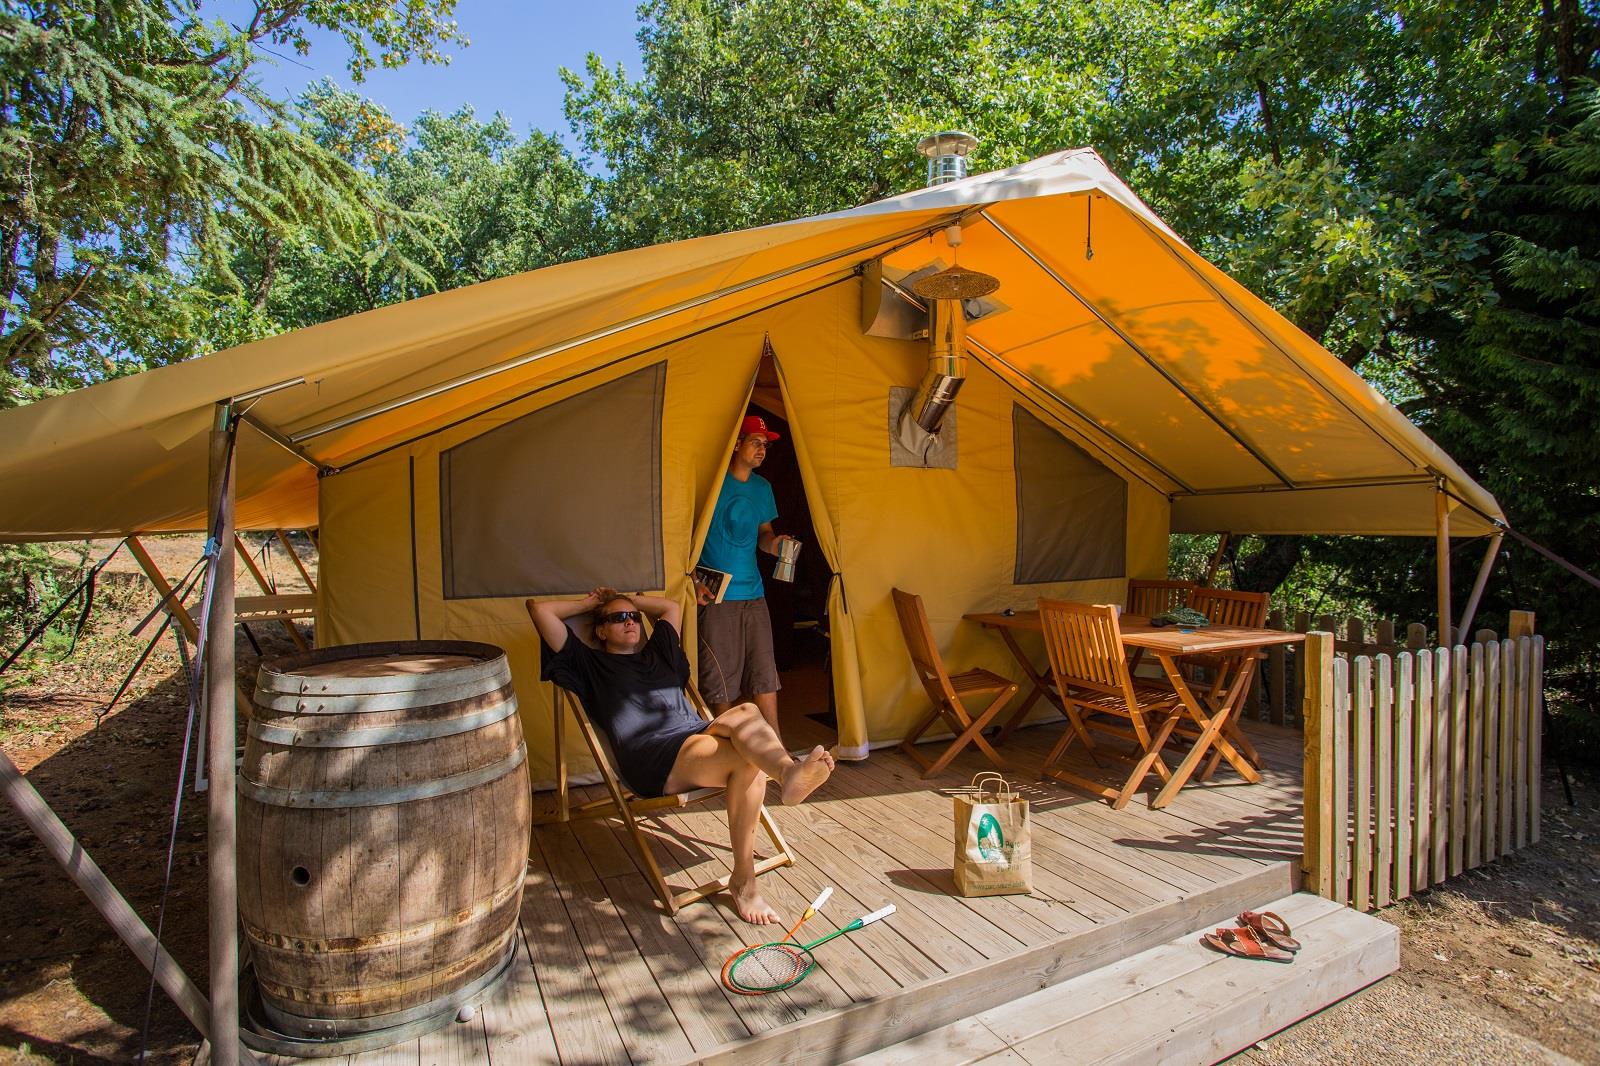 Accommodation - Tent Wine Lodge With Cozy Comfort For Evenings Around A Wood Stove - Sites et Paysages Bel'époque du Pilat